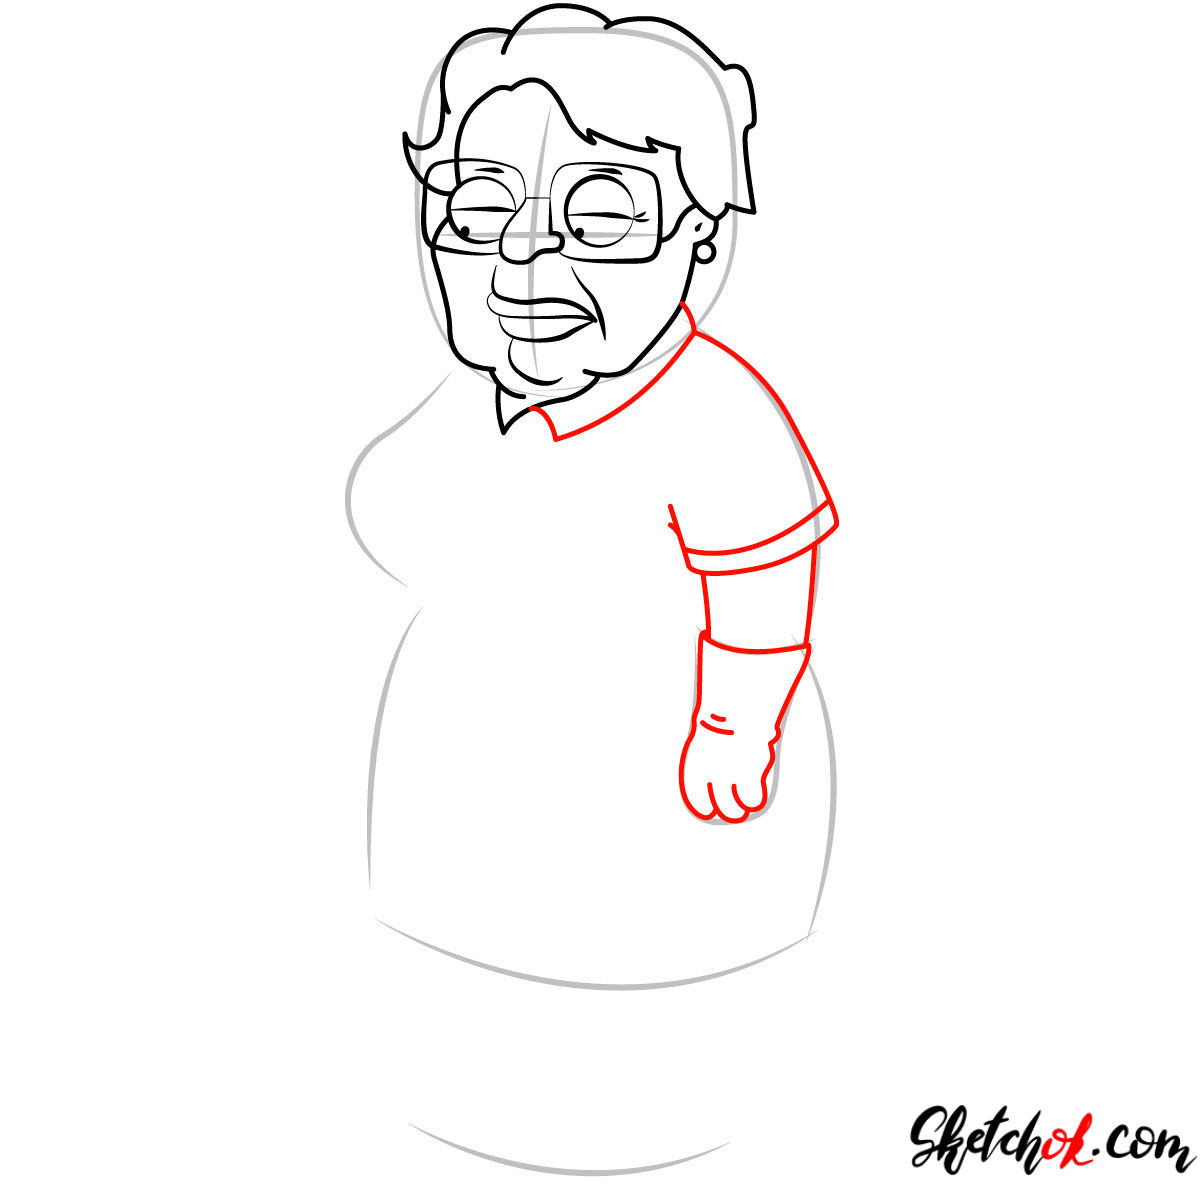 How to draw Consuela (Family Guy) - step 05